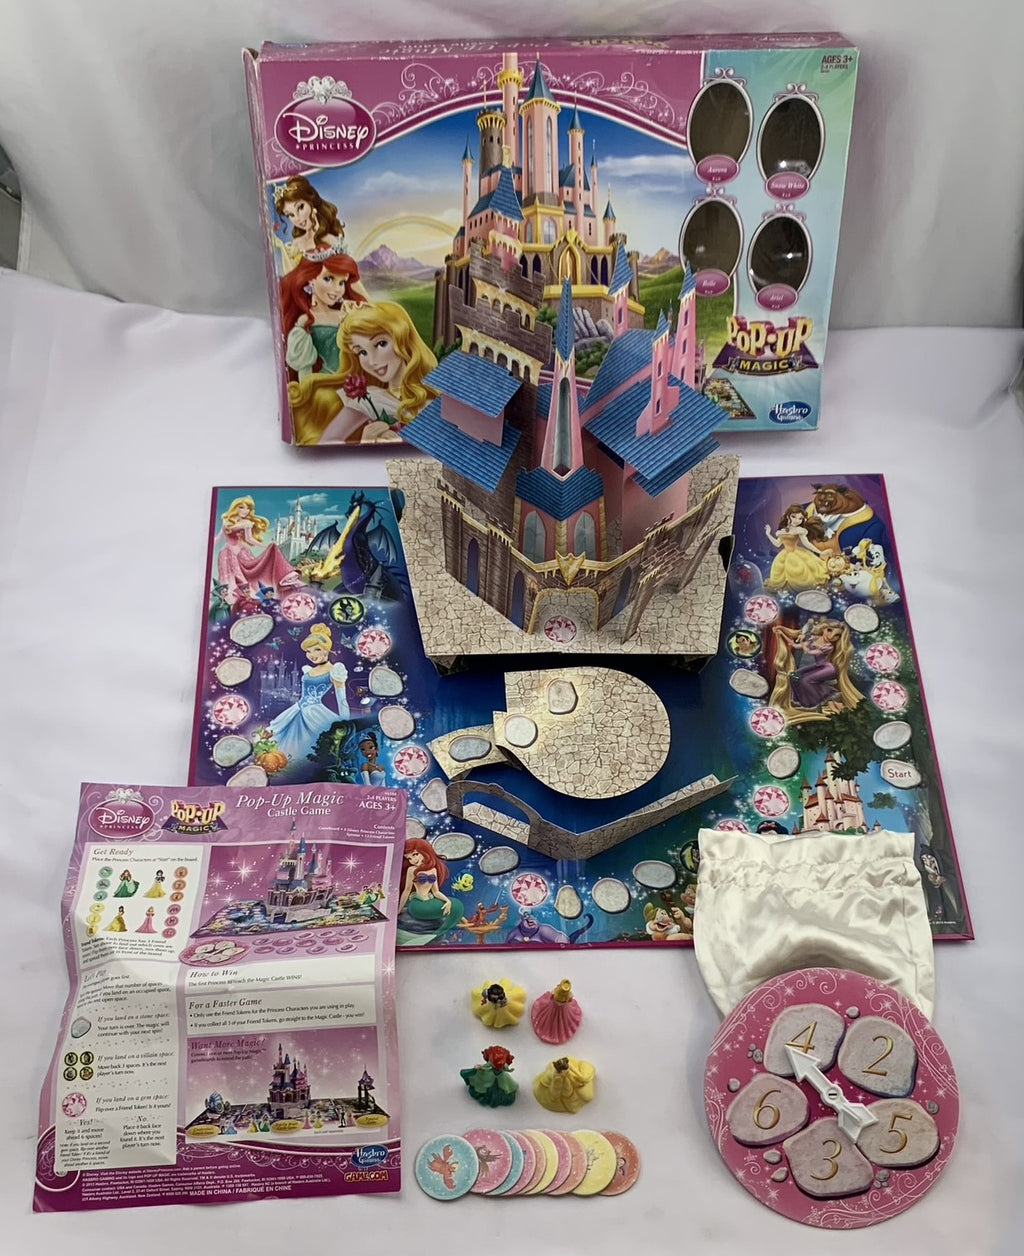 Disney Princess Pop-Up Magic Castle Game - 2013 - Hasbro - Great Condition